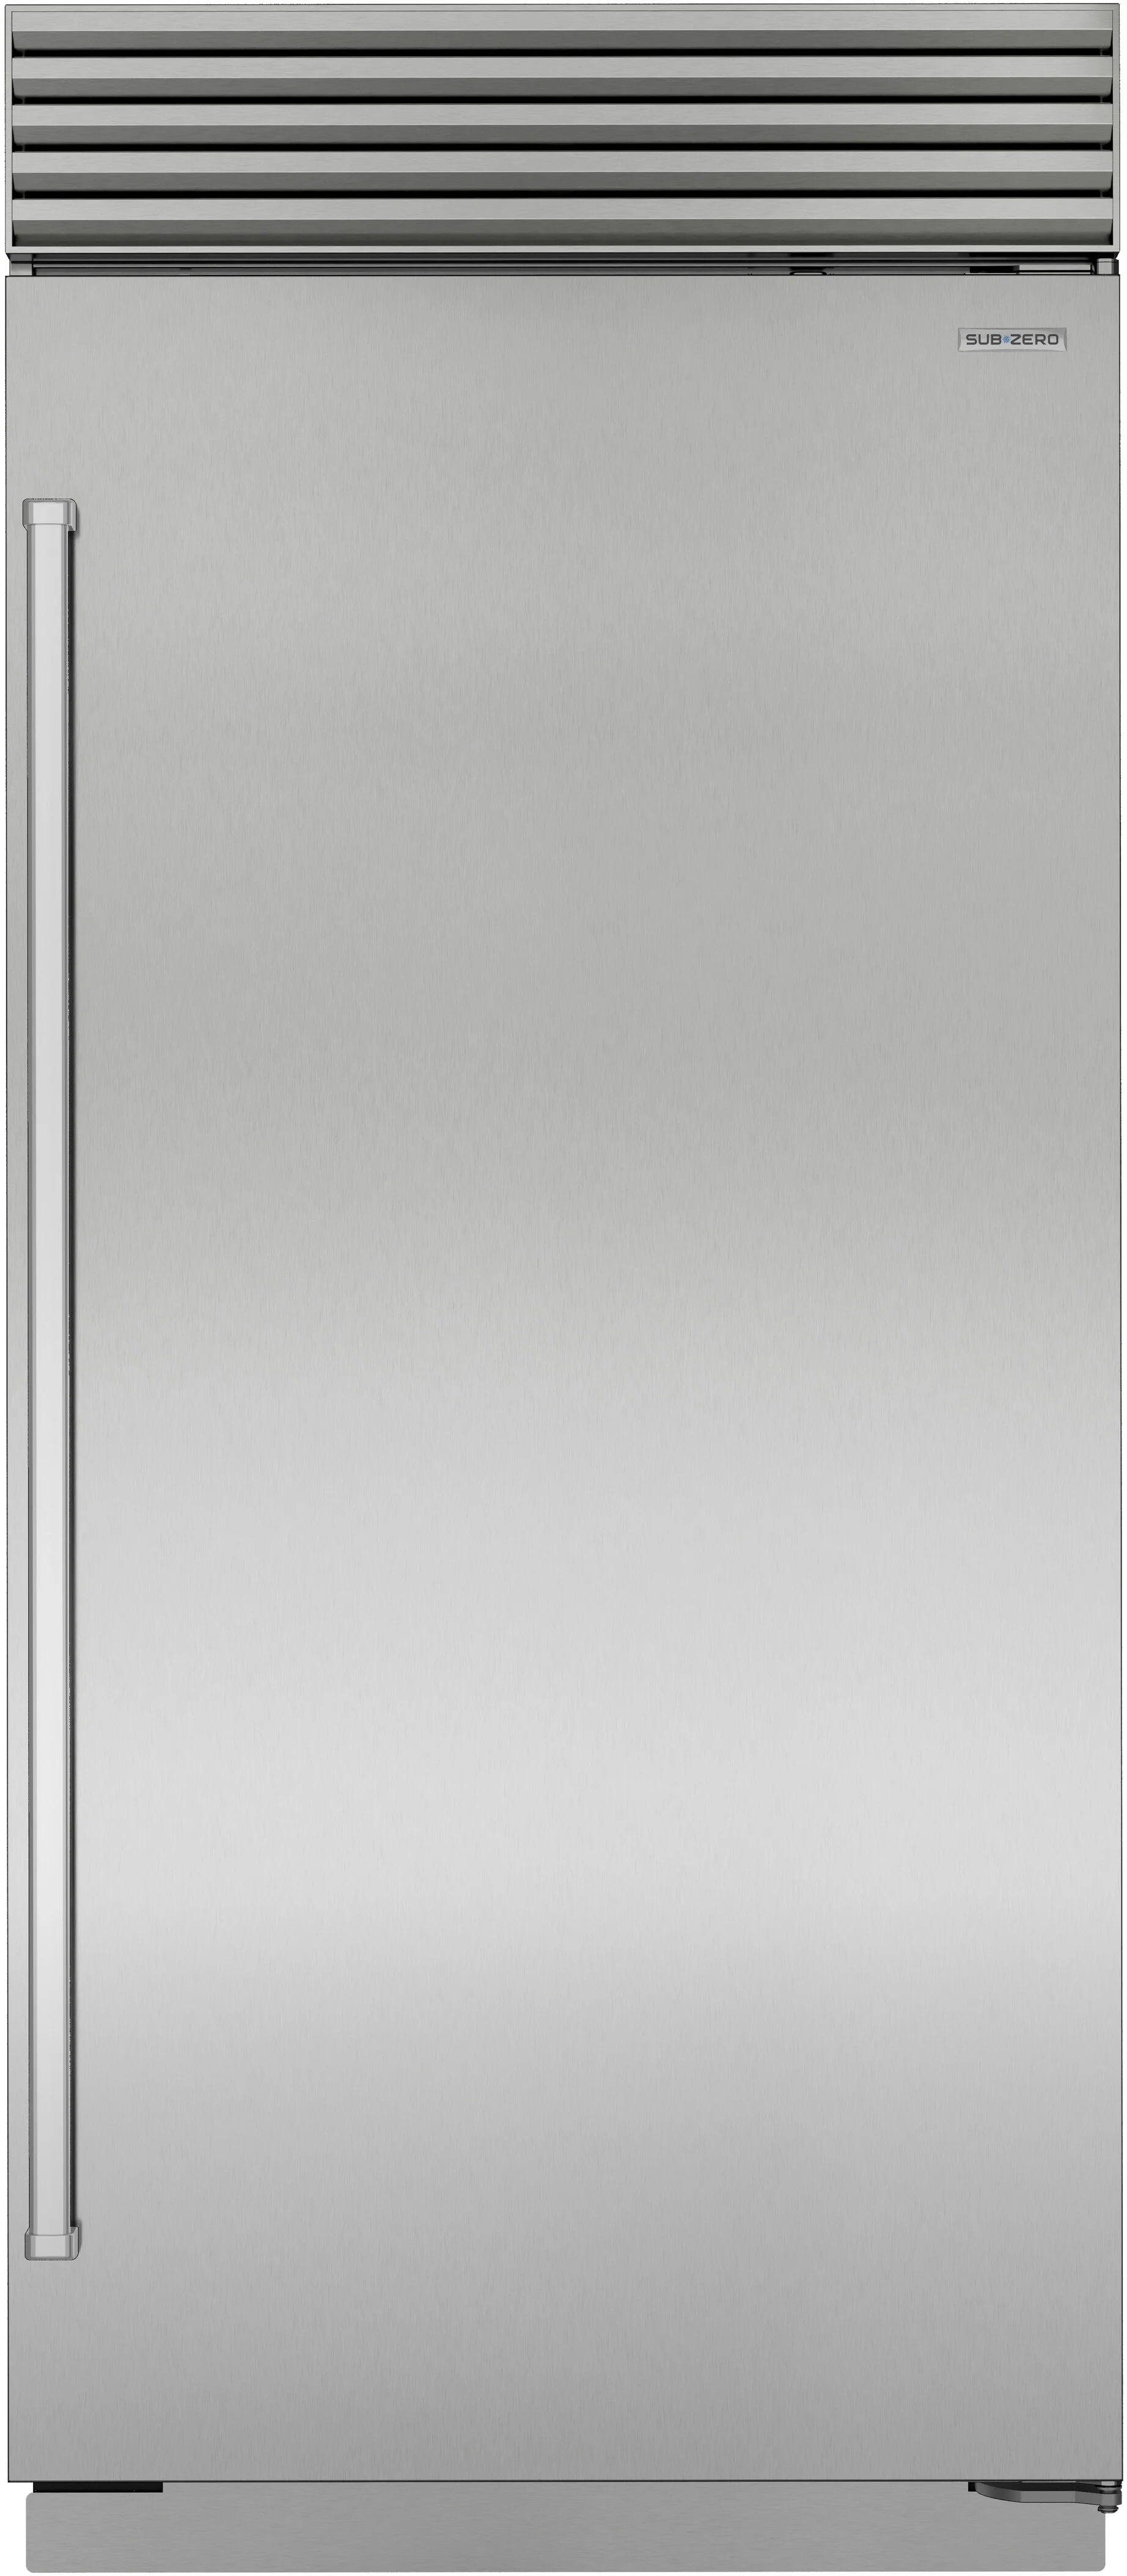 Sub-Zero 36 Classic Refrigerator